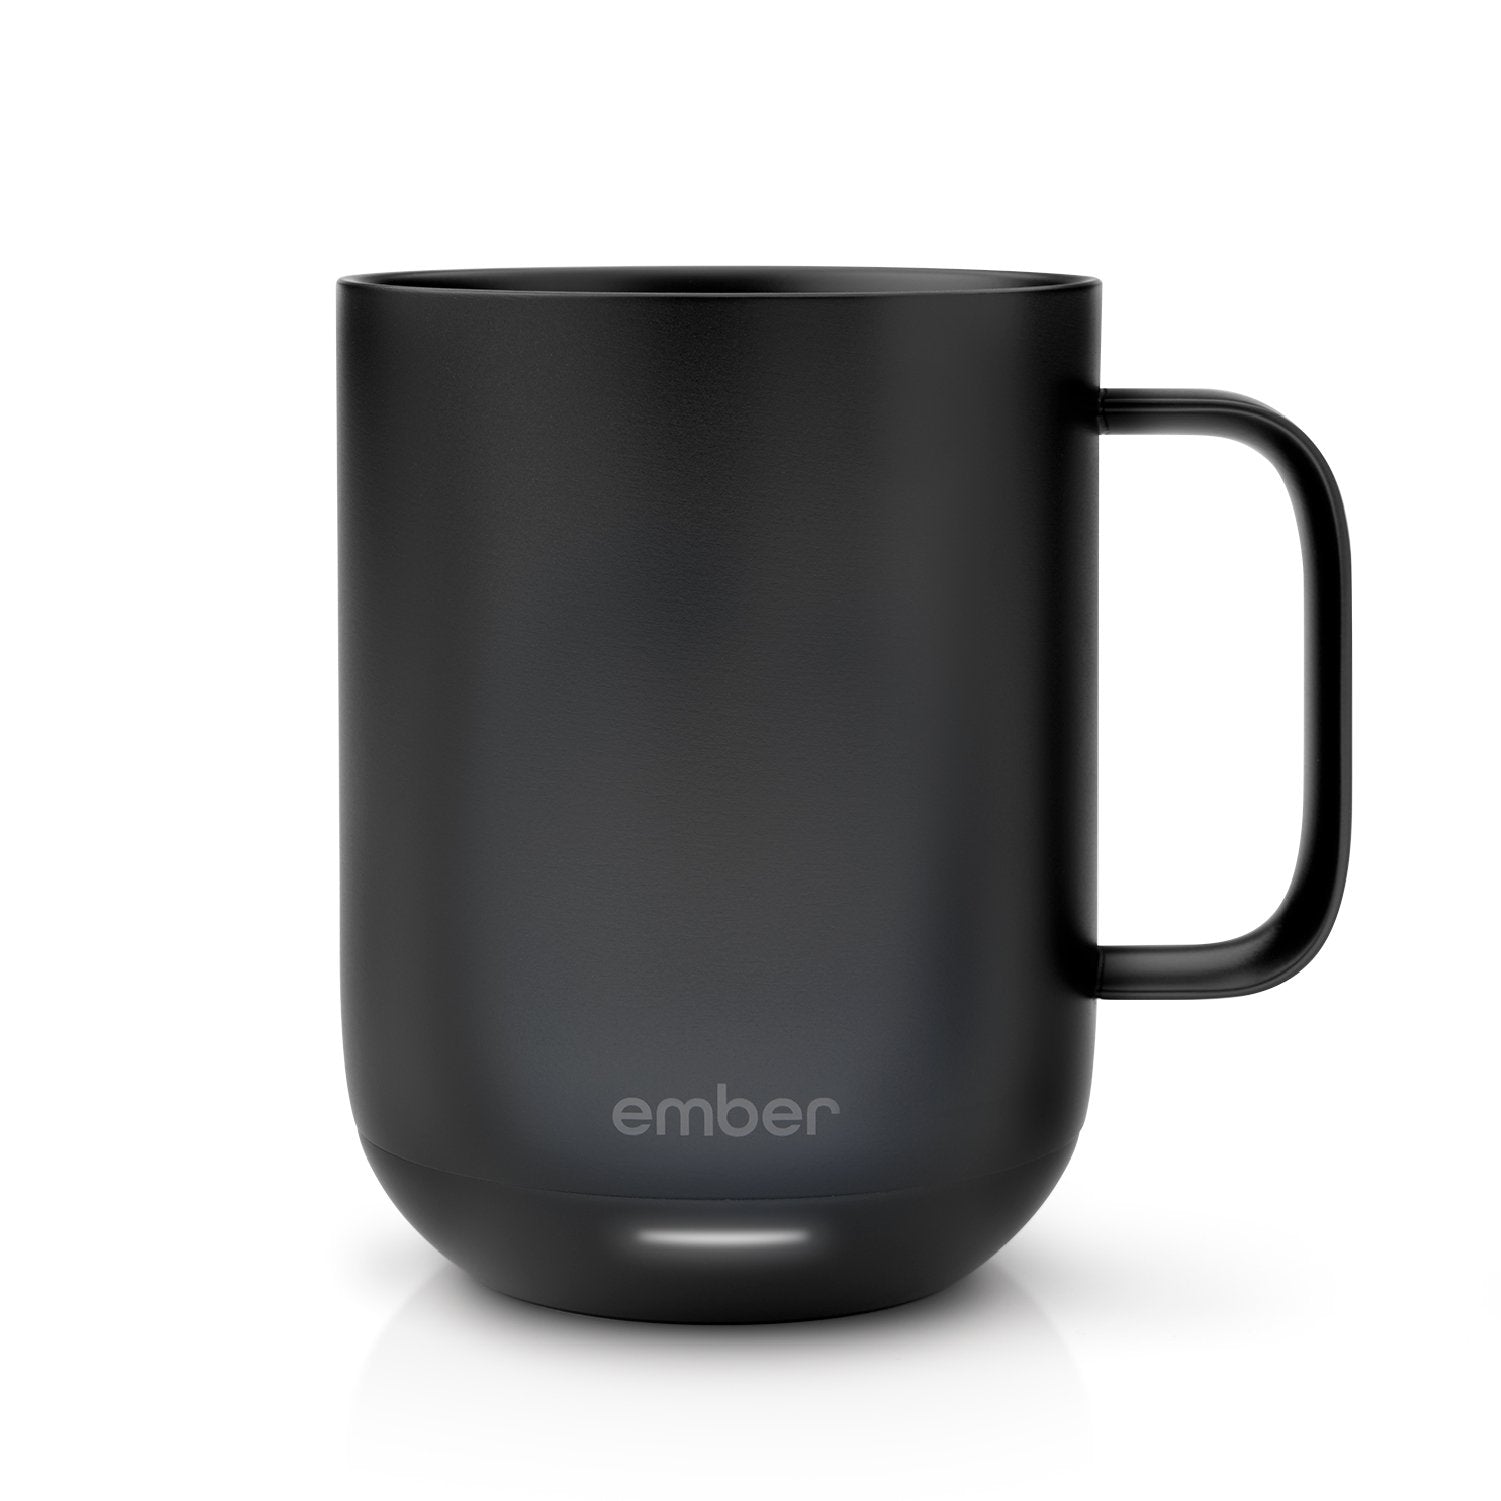 Best Ember Mug Lids: Take Your Ember Anywhere 